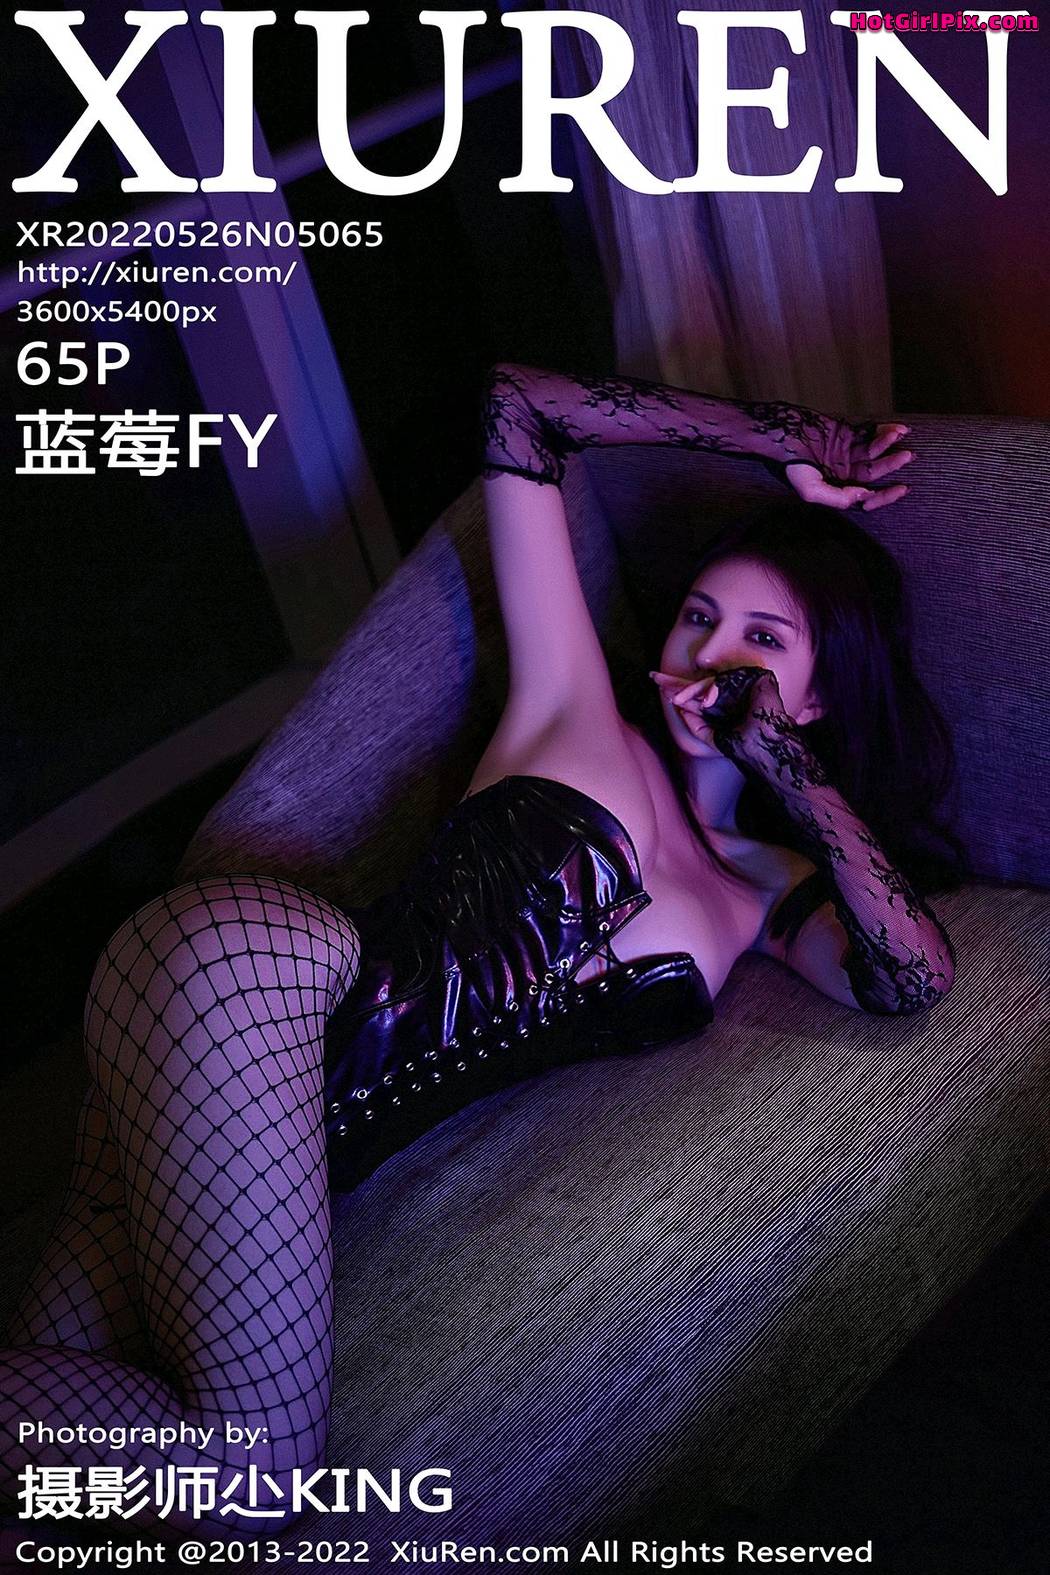 [XIUREN] No.5065 蓝莓FY Cover Photo